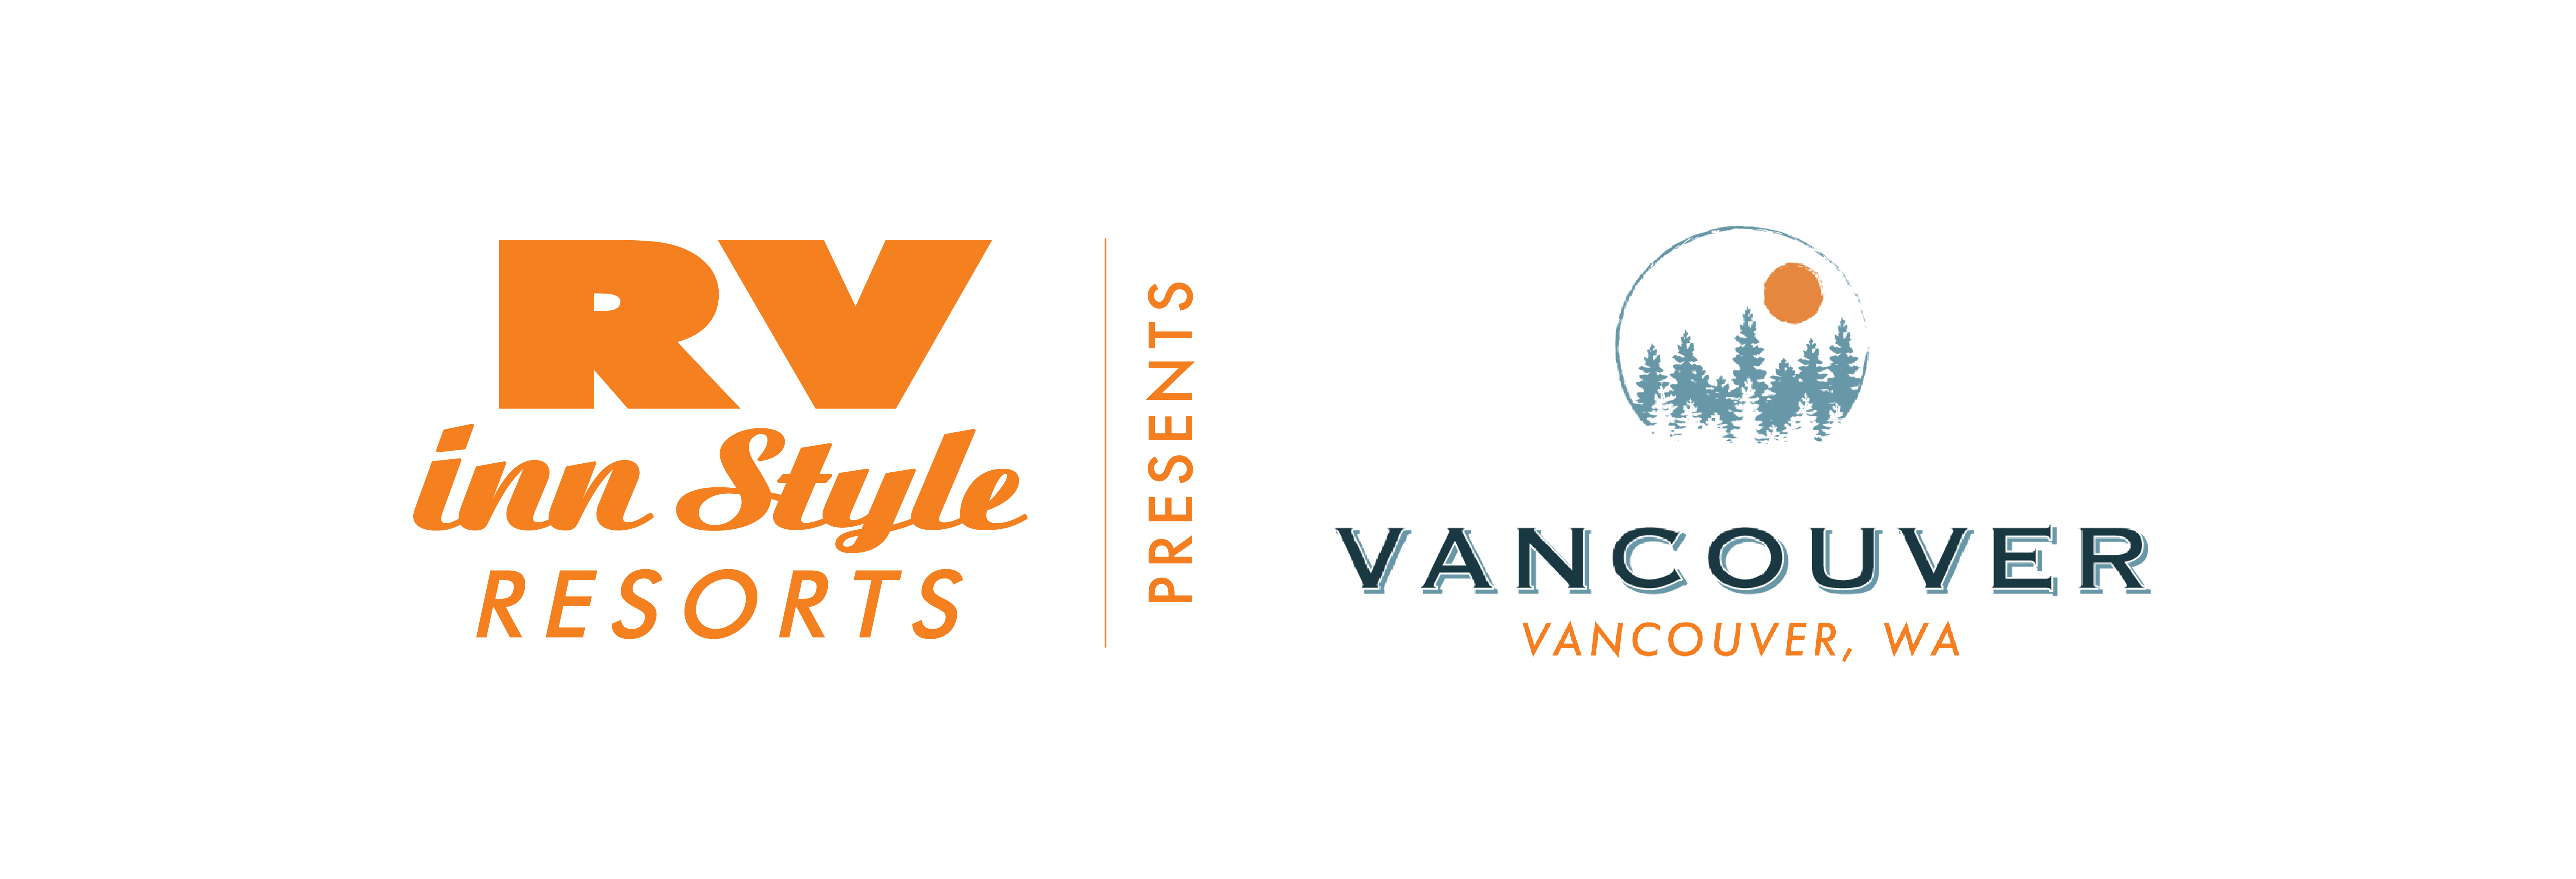 Vancouver RV Park in Vancouver, WA